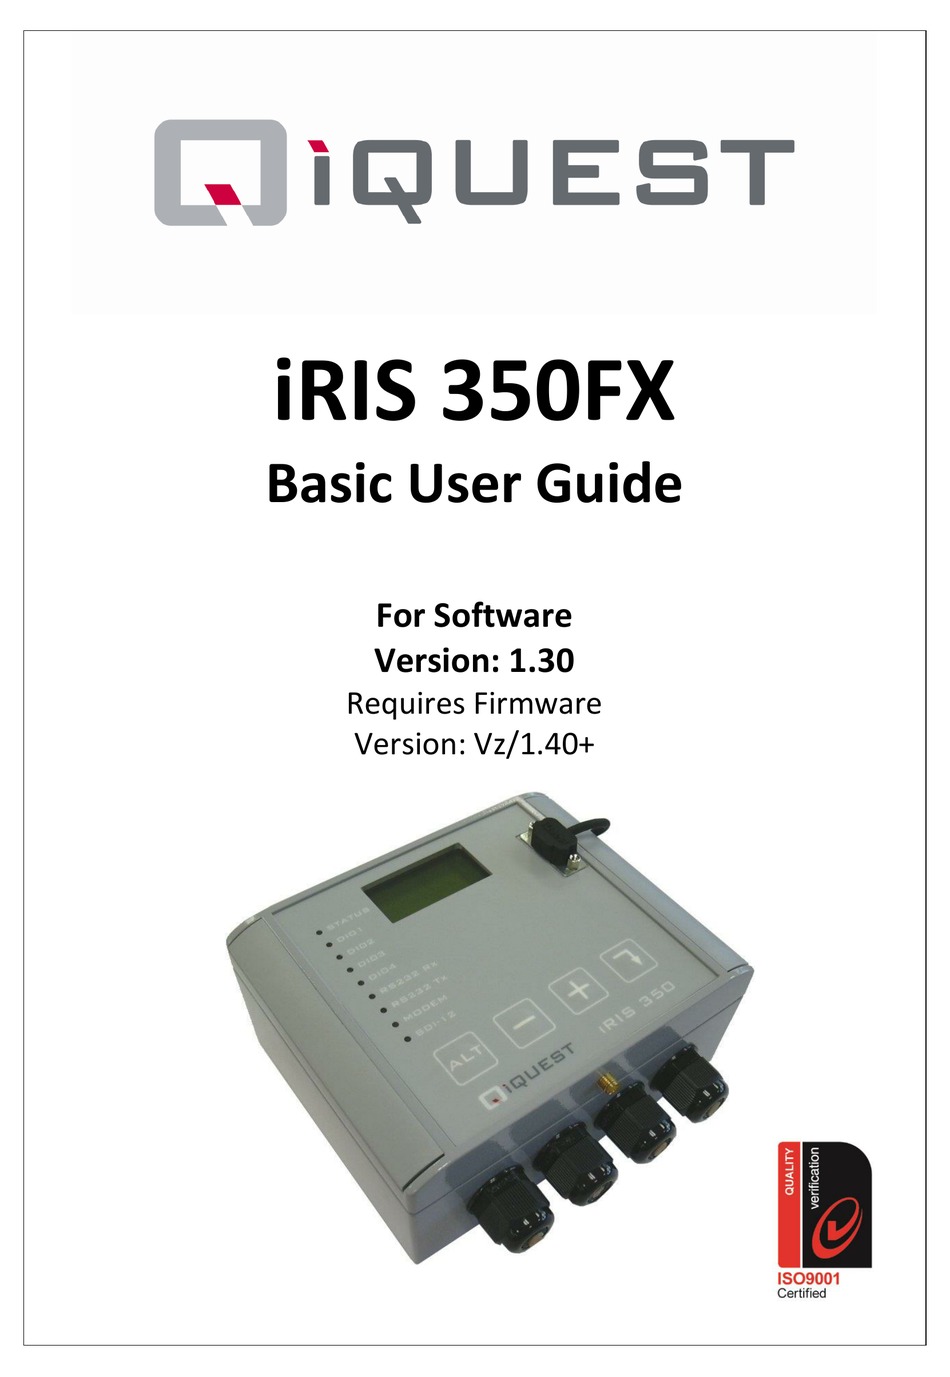 IQUEST IRIS 350FX BASIC USER'S MANUAL Pdf Download